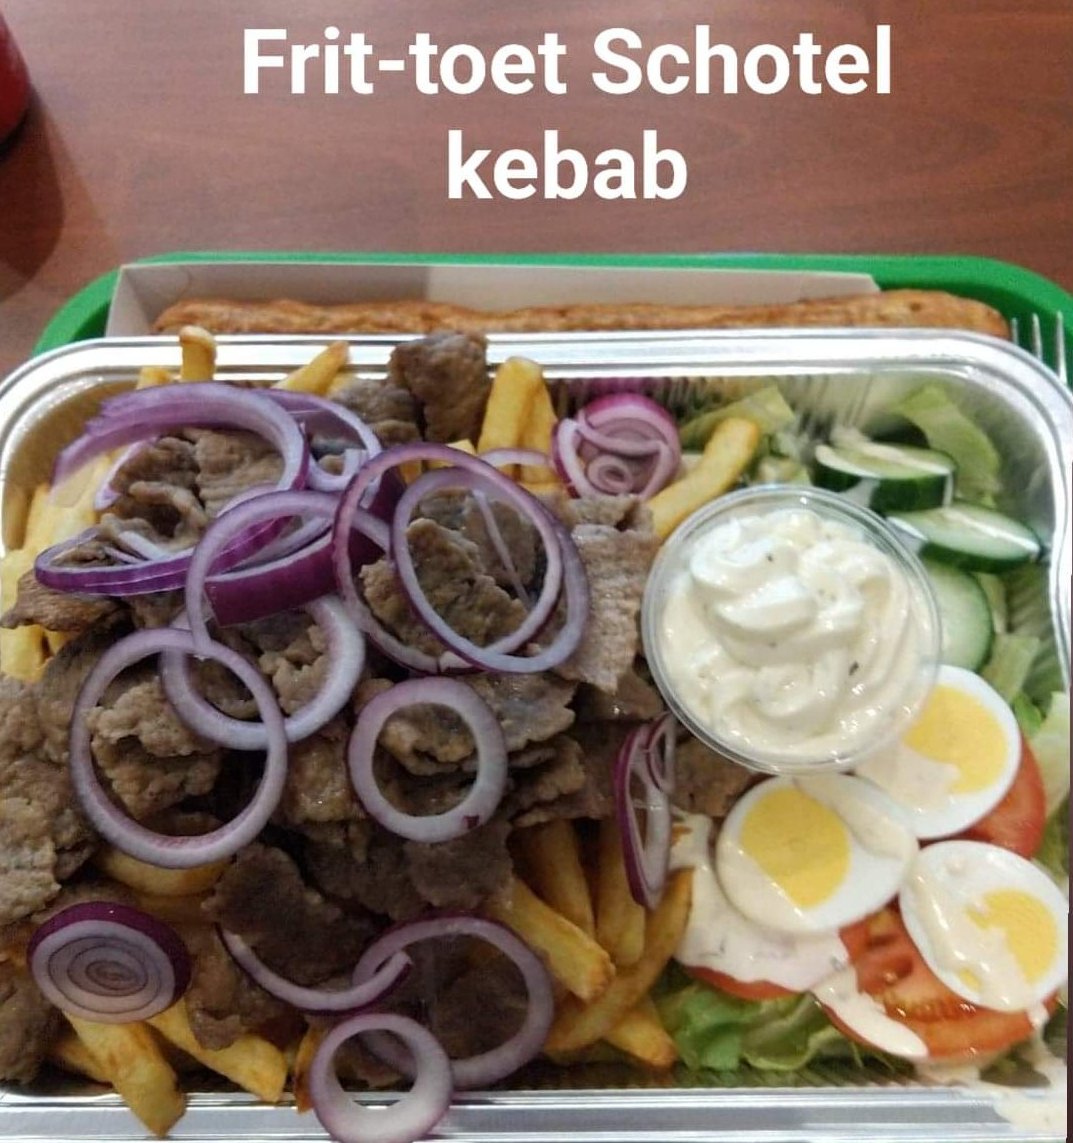 Schotel Kebab